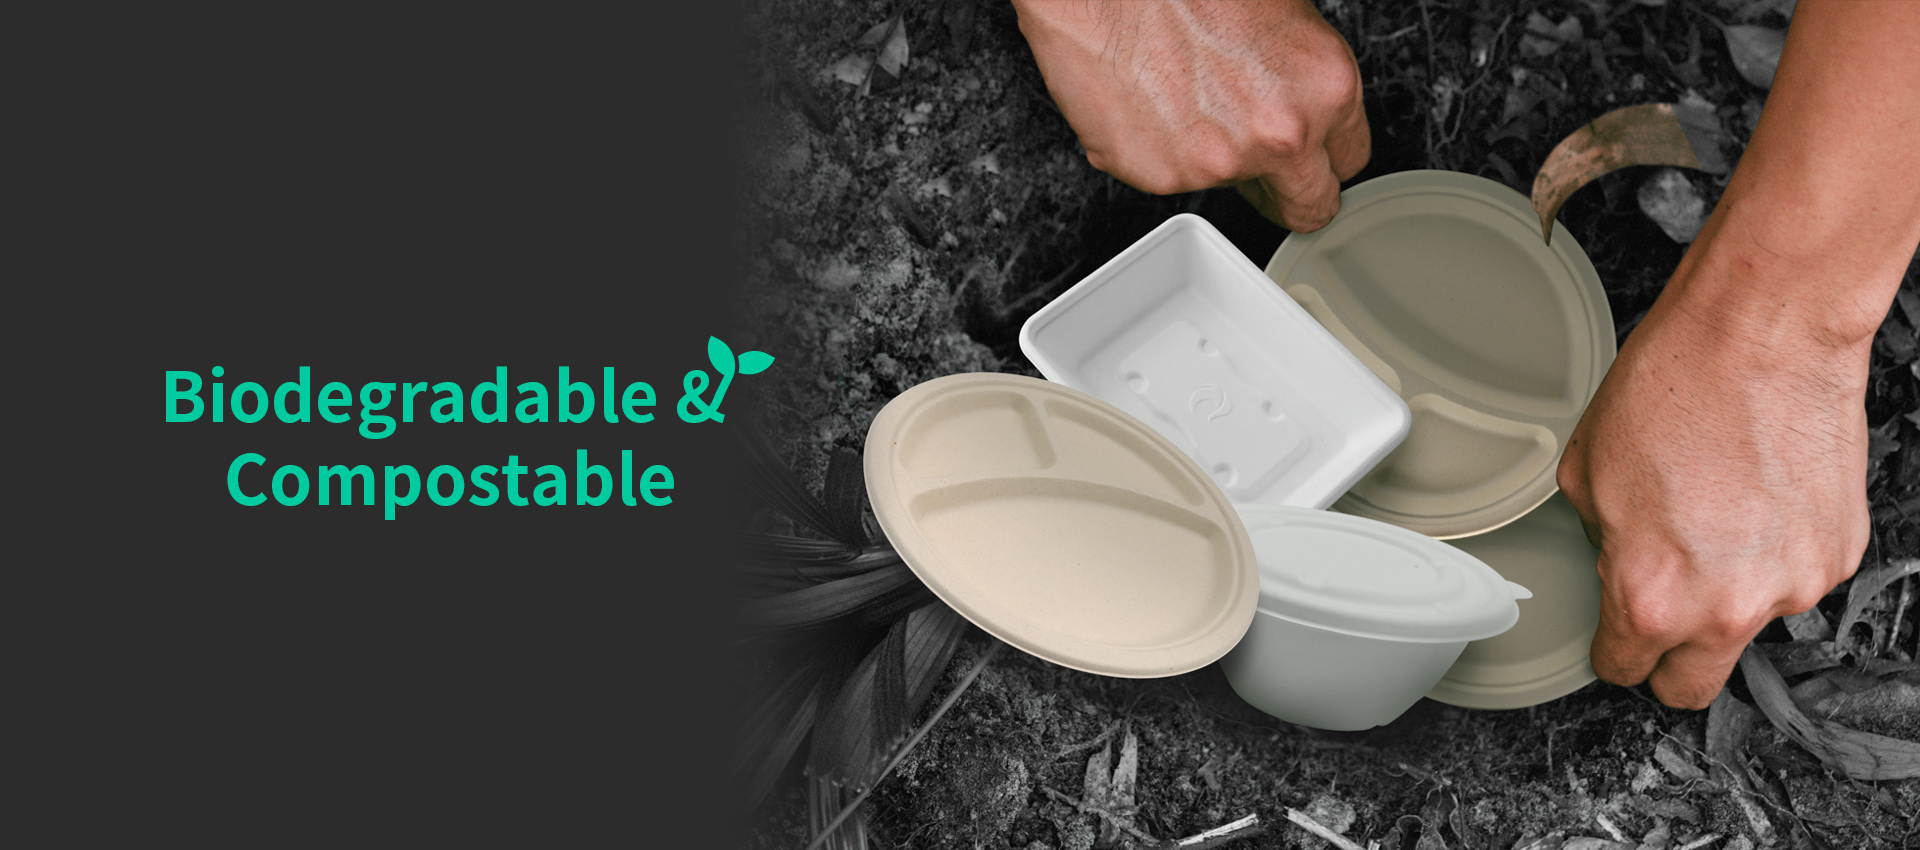 Biodegradability & Compostability